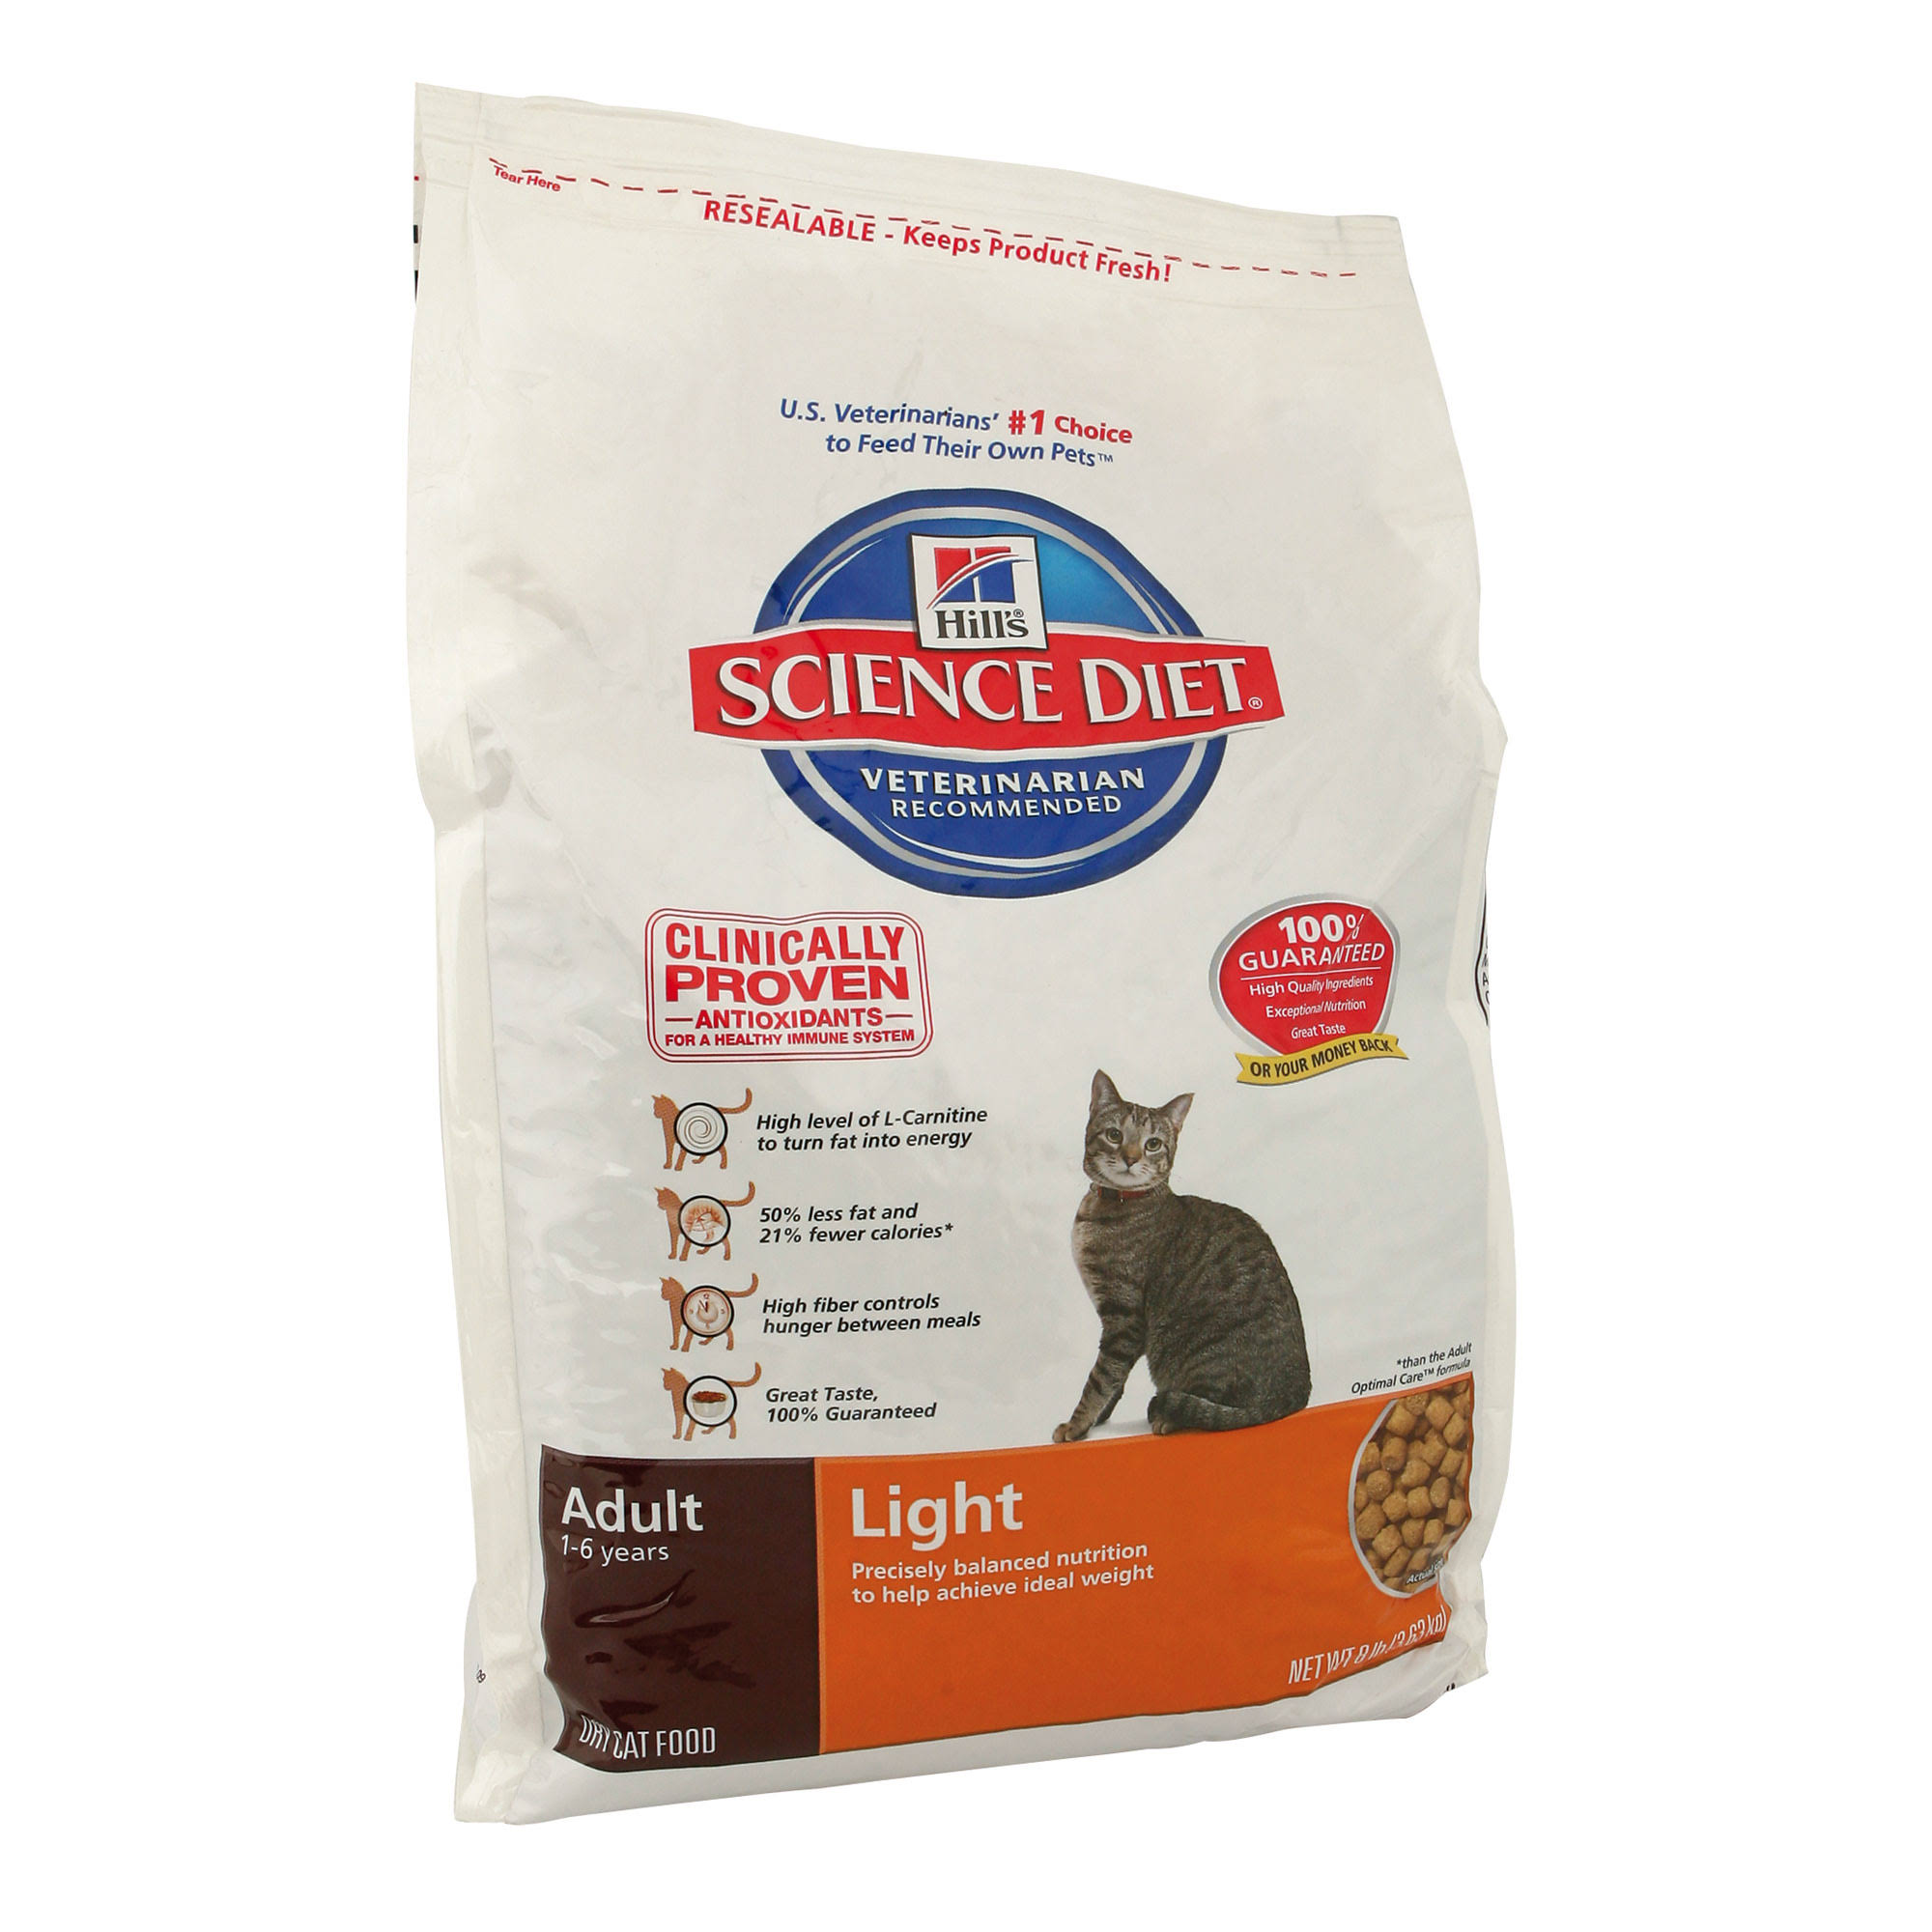 Hill's Science Diet Light Premium Natural Cat Food - Chicken Recipe, 4lb